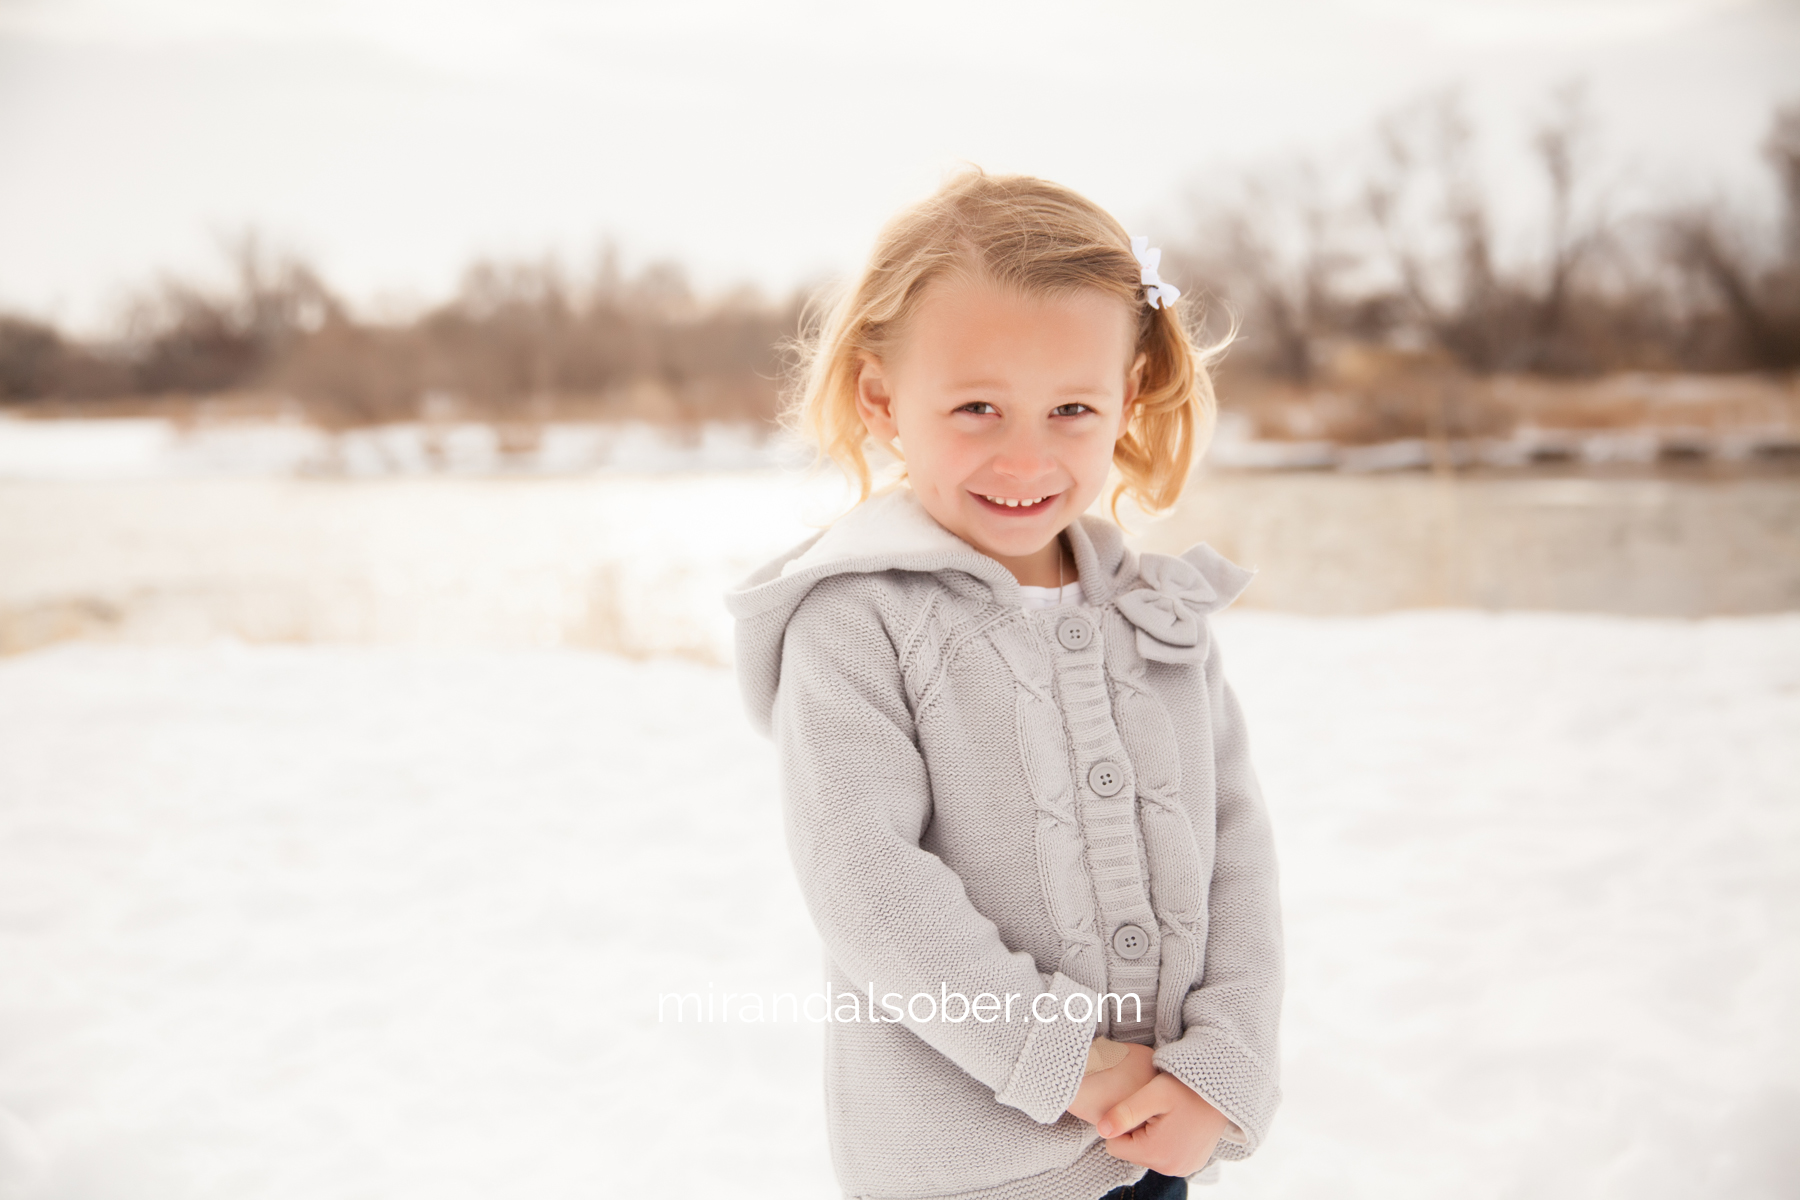 Family photographer Fort Collins, Miranda L. Sober Photography, winter family photos